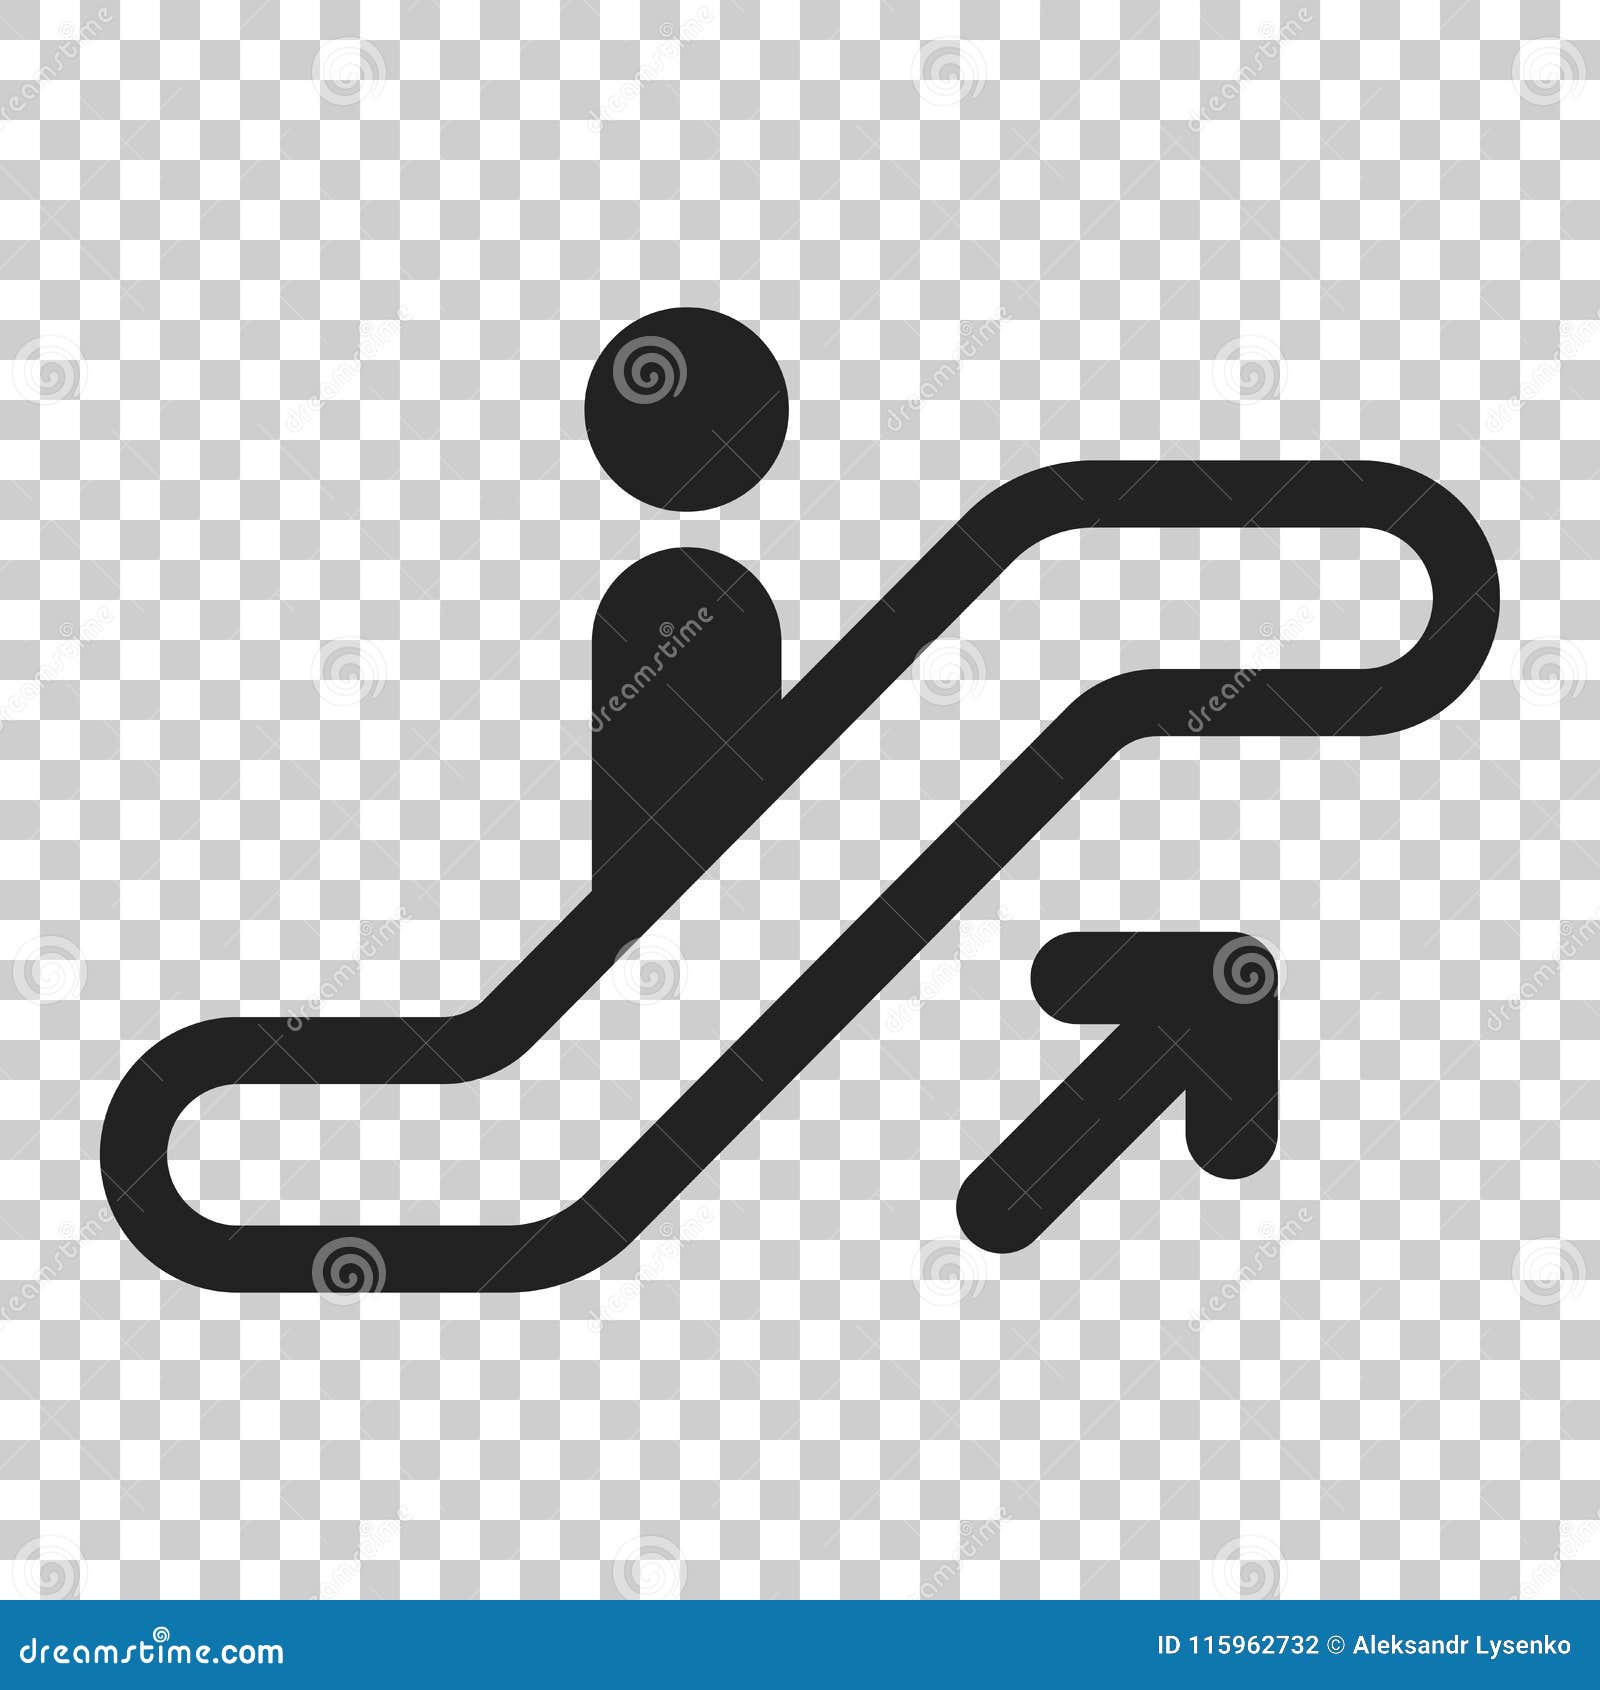 escalator elevator icon.   on  transparent background. business concept escalator pictogram.